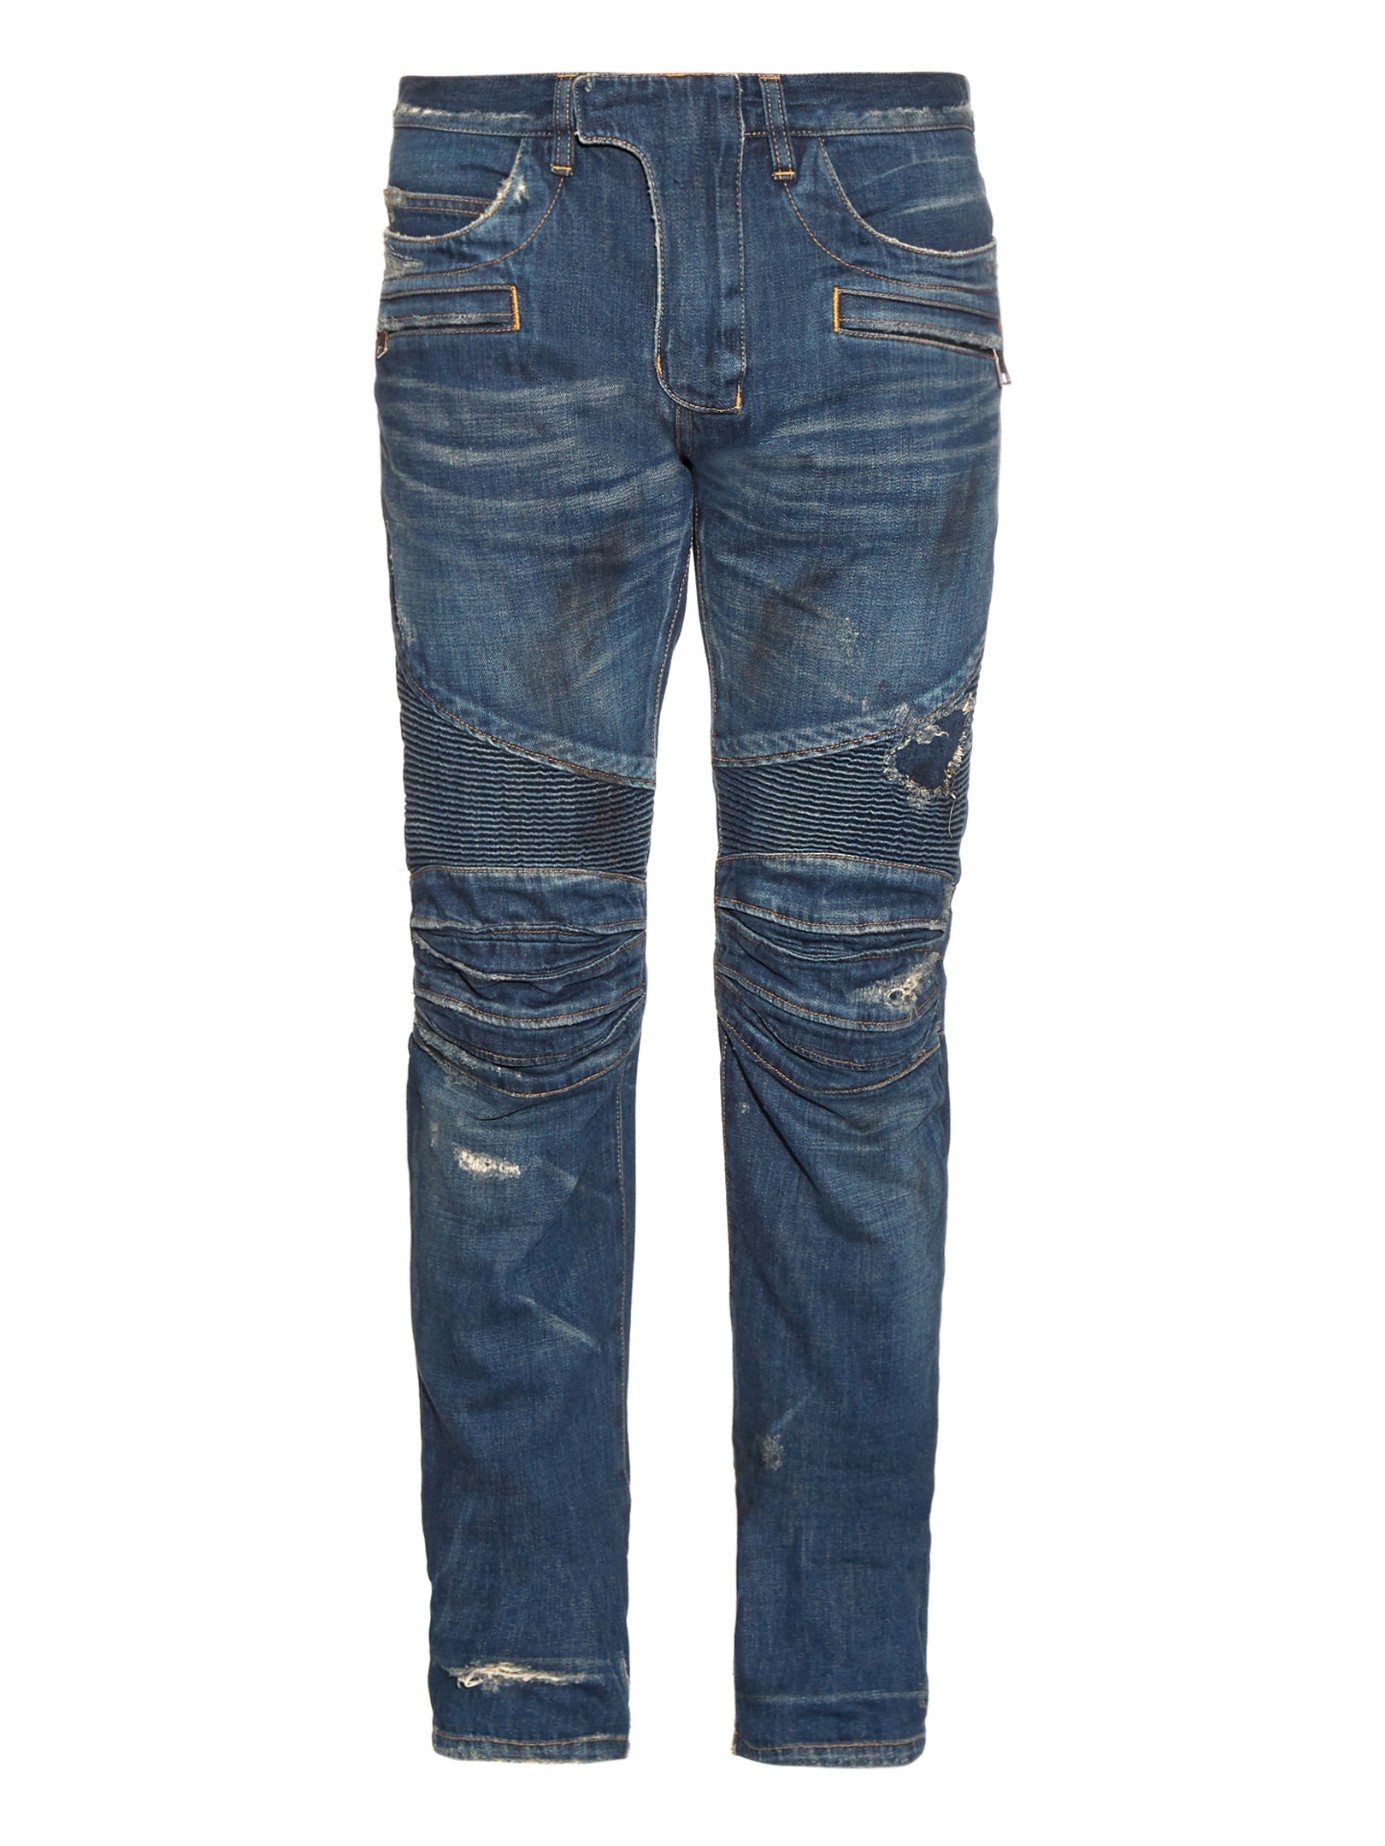 Lyst - Balmain Biker Slim-leg Distressed Jeans in Blue for Men